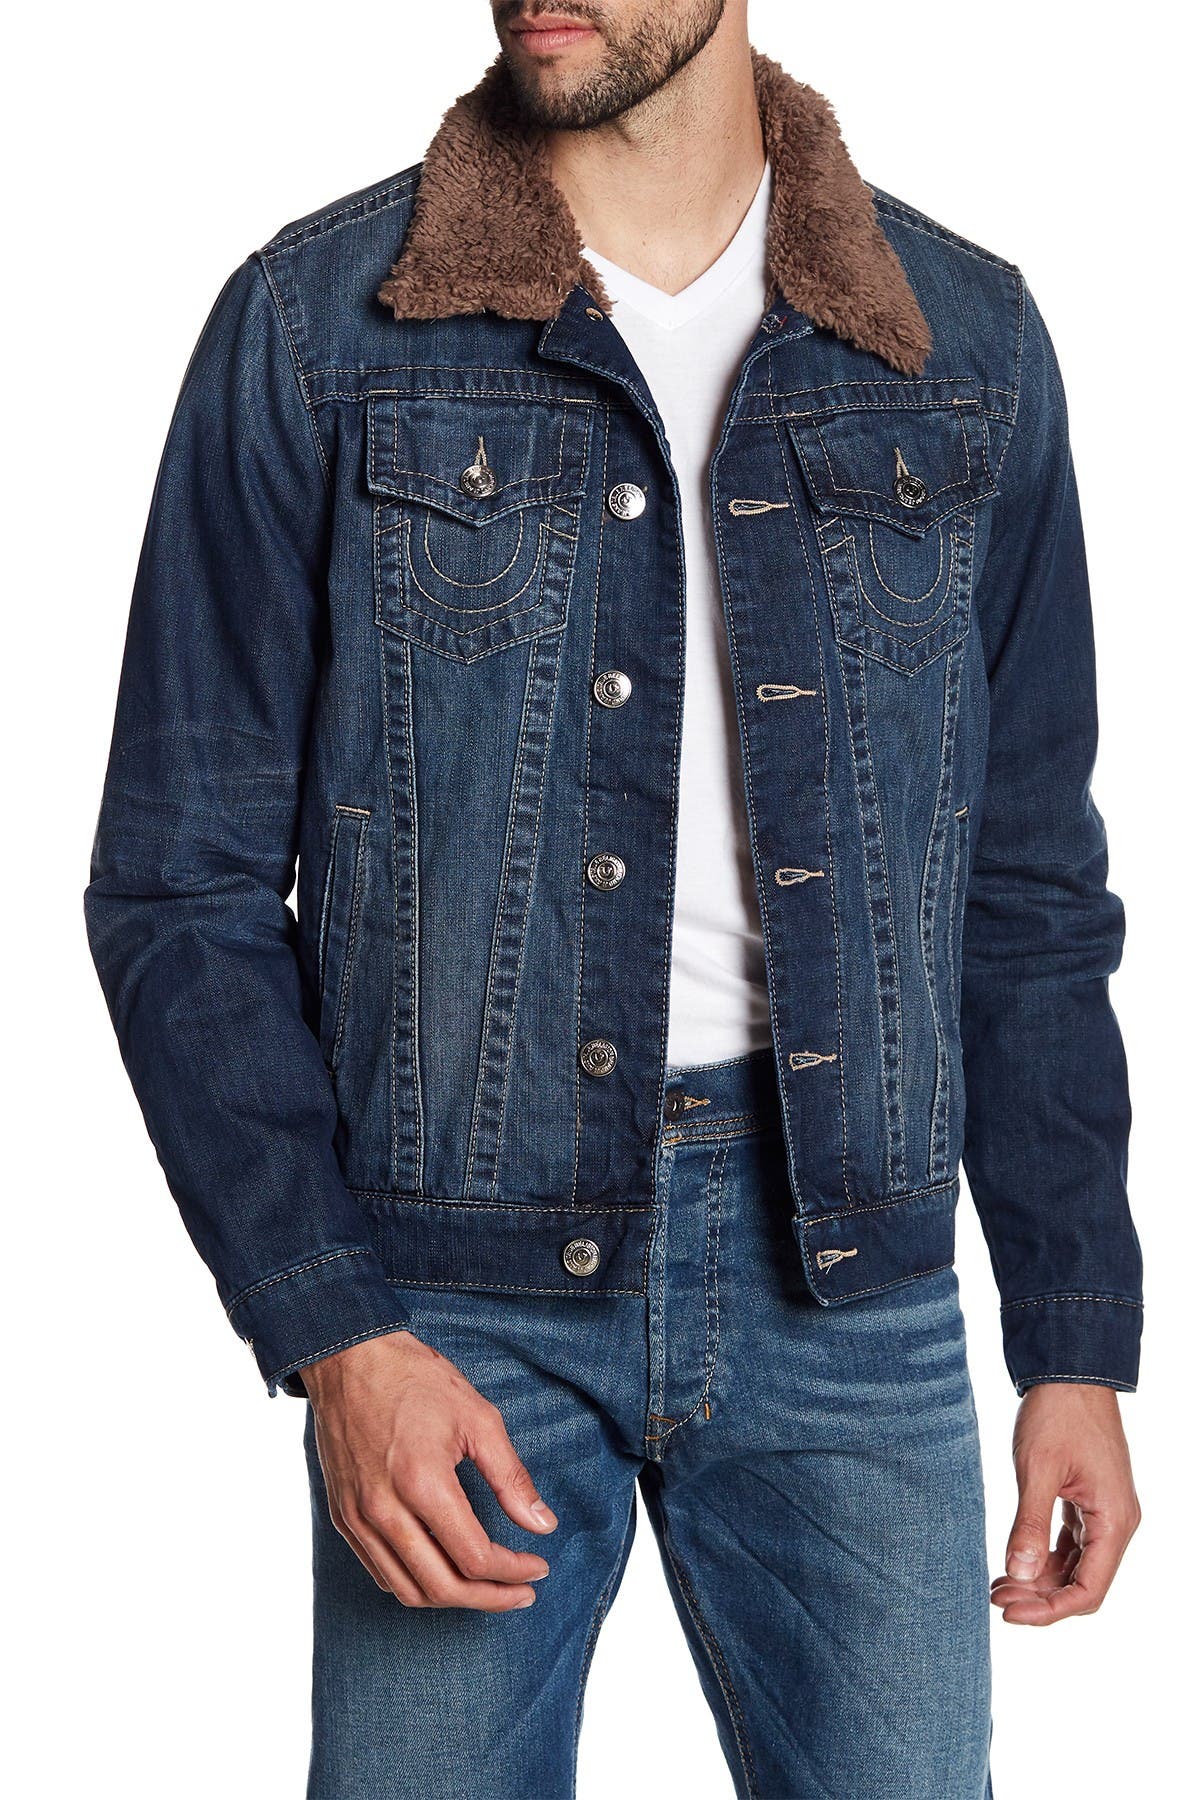 true religion jean jacket with fur collar